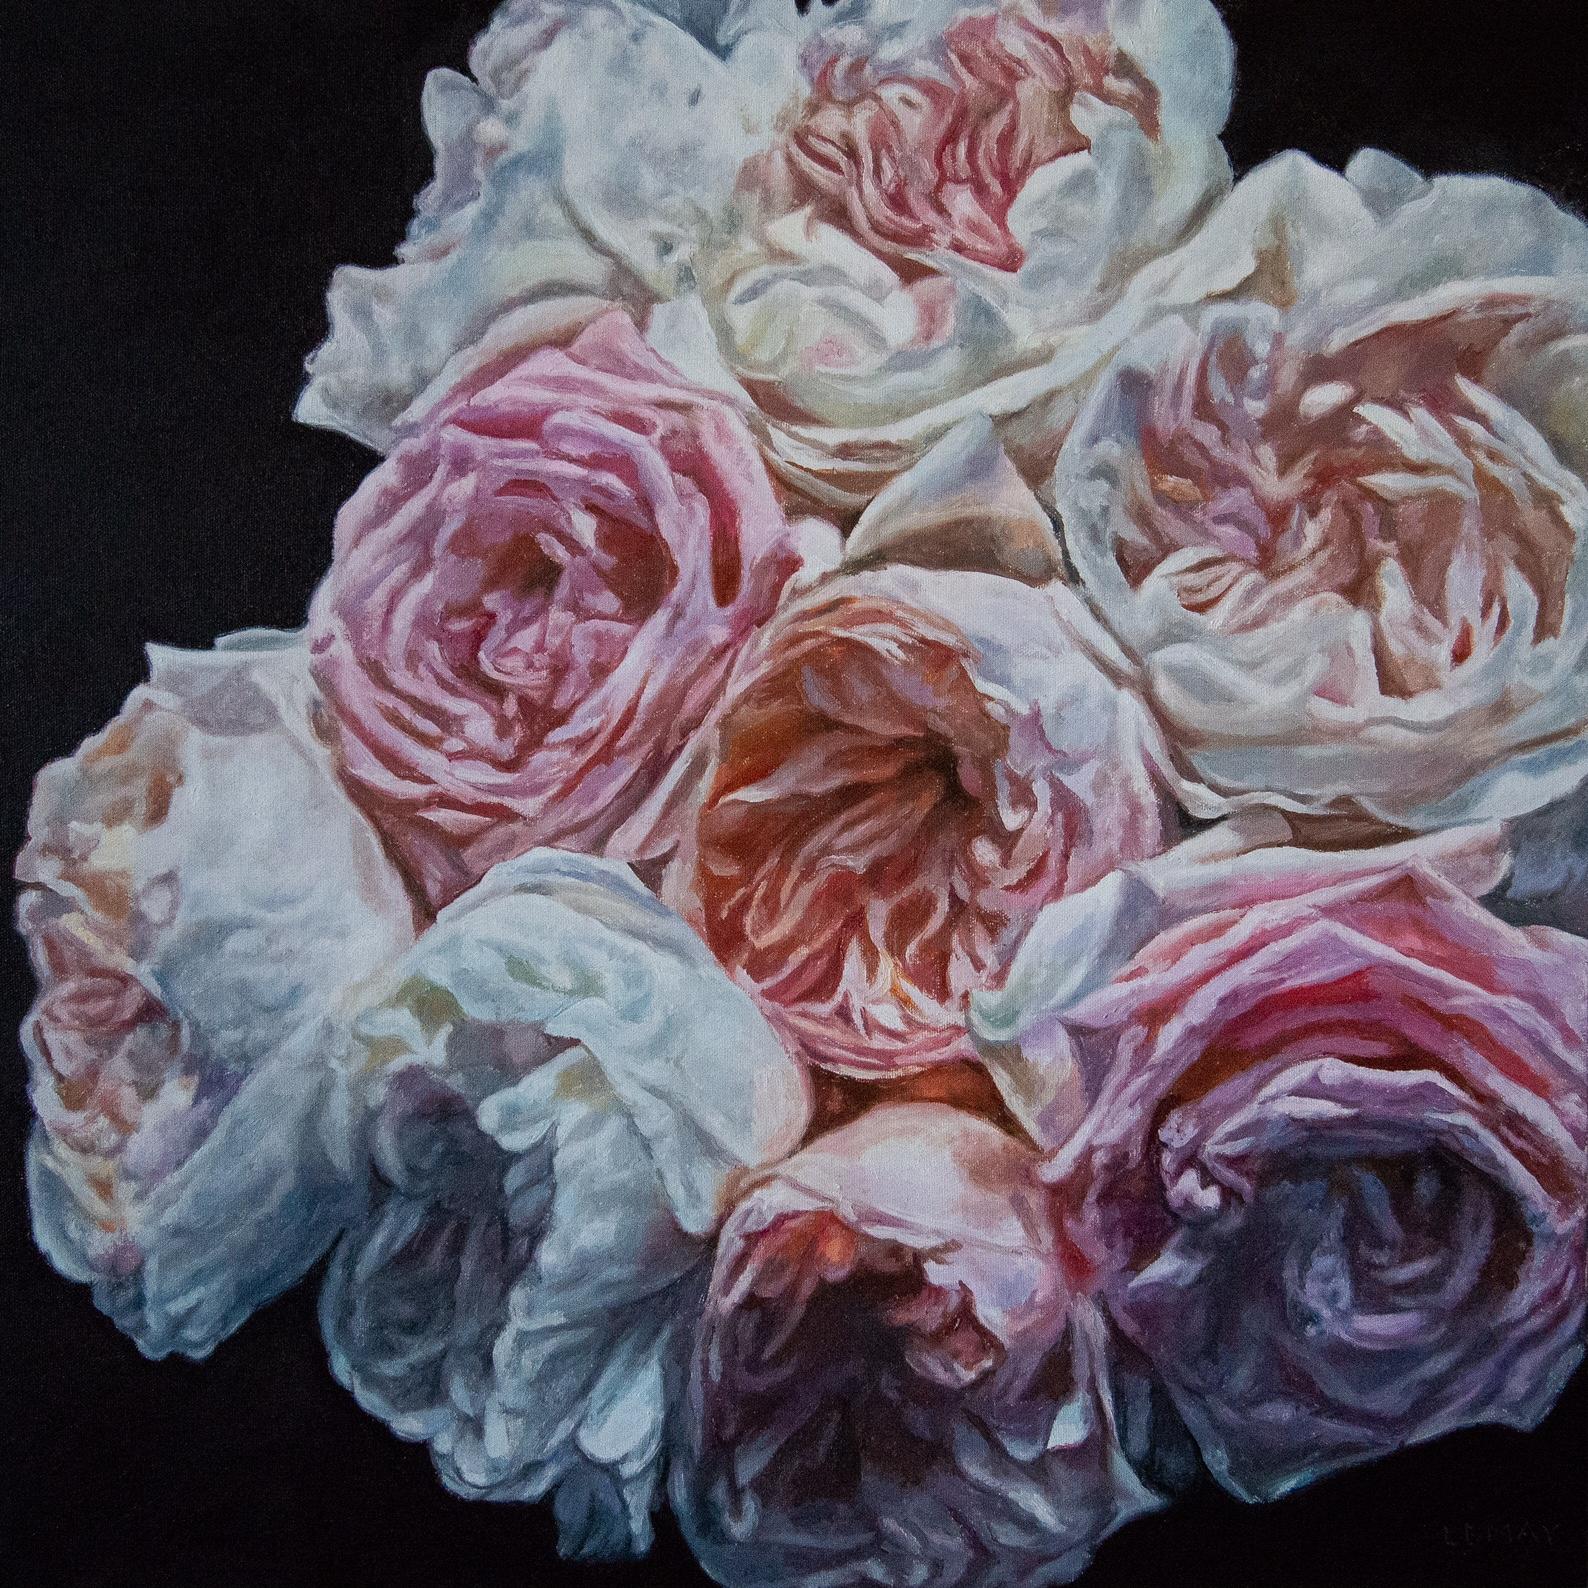 David Austin Roses-original realism still life oil painting-contemporary Art - Painting by Robert Lemay